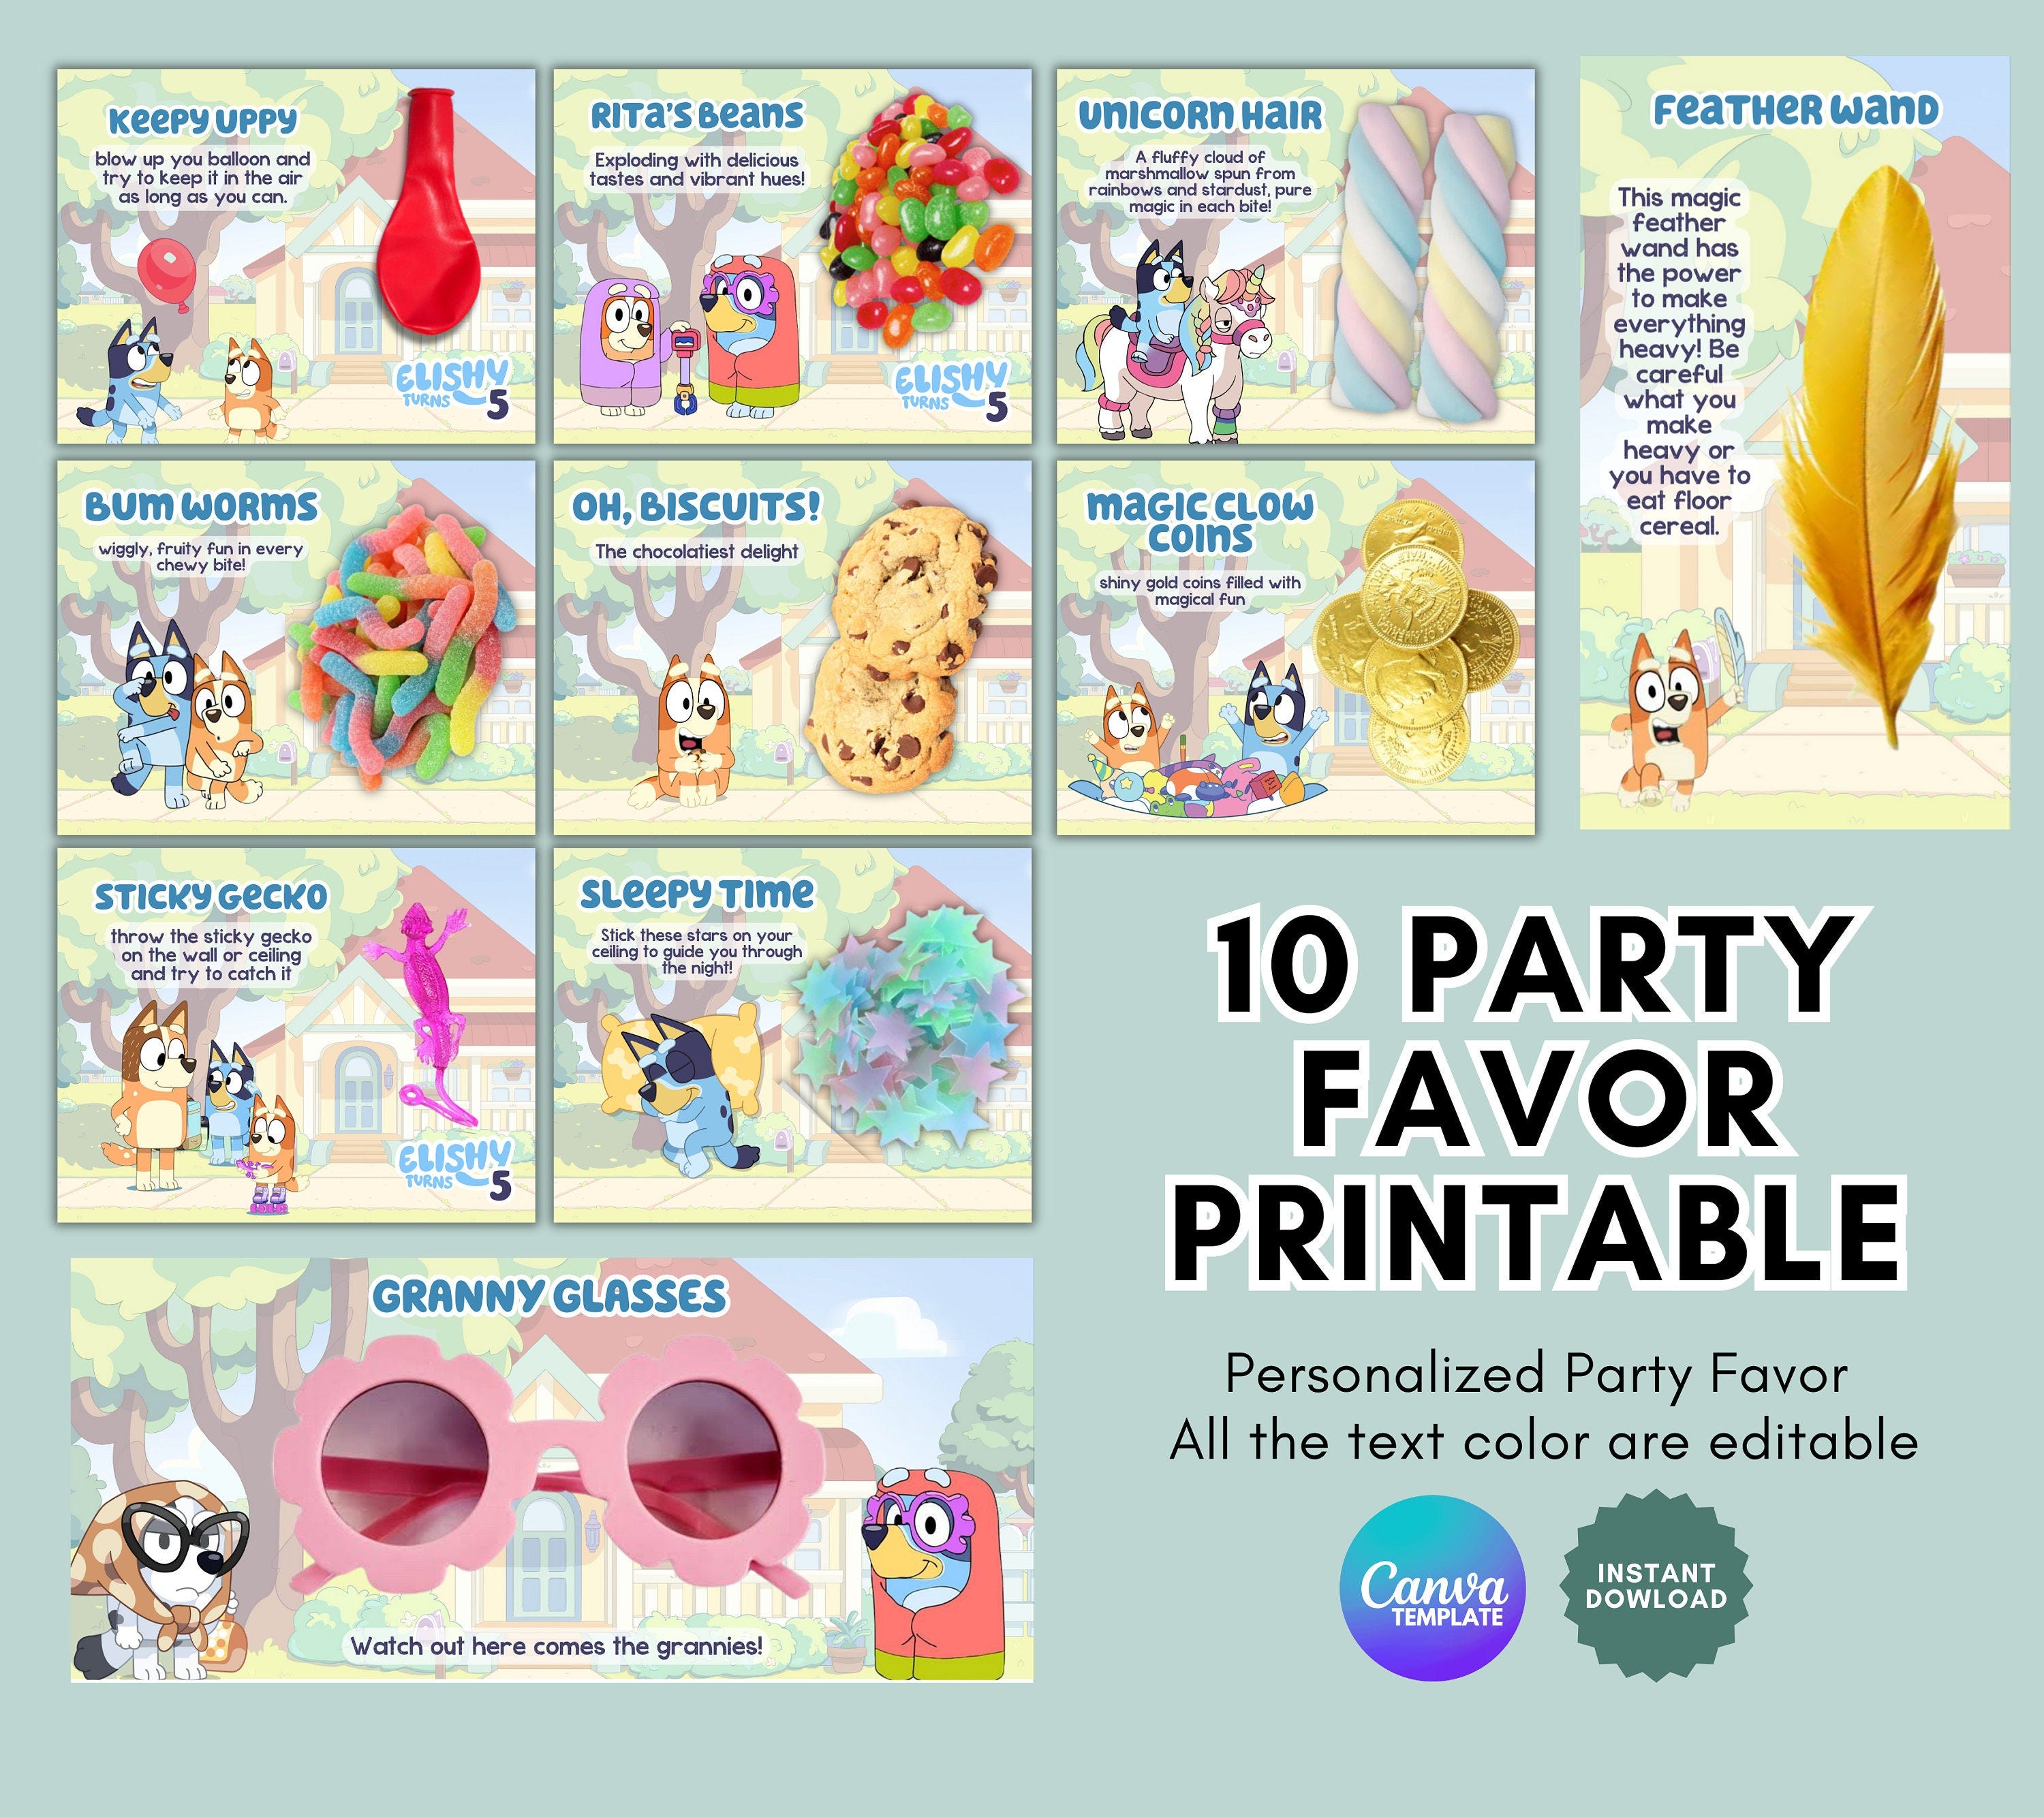 10 Bluey Party Favor Printables, Birthday Treat Blundles Bluey, Personalized Bluey Party Favor Labels Keepy Uppy Granny Glassss, Canva